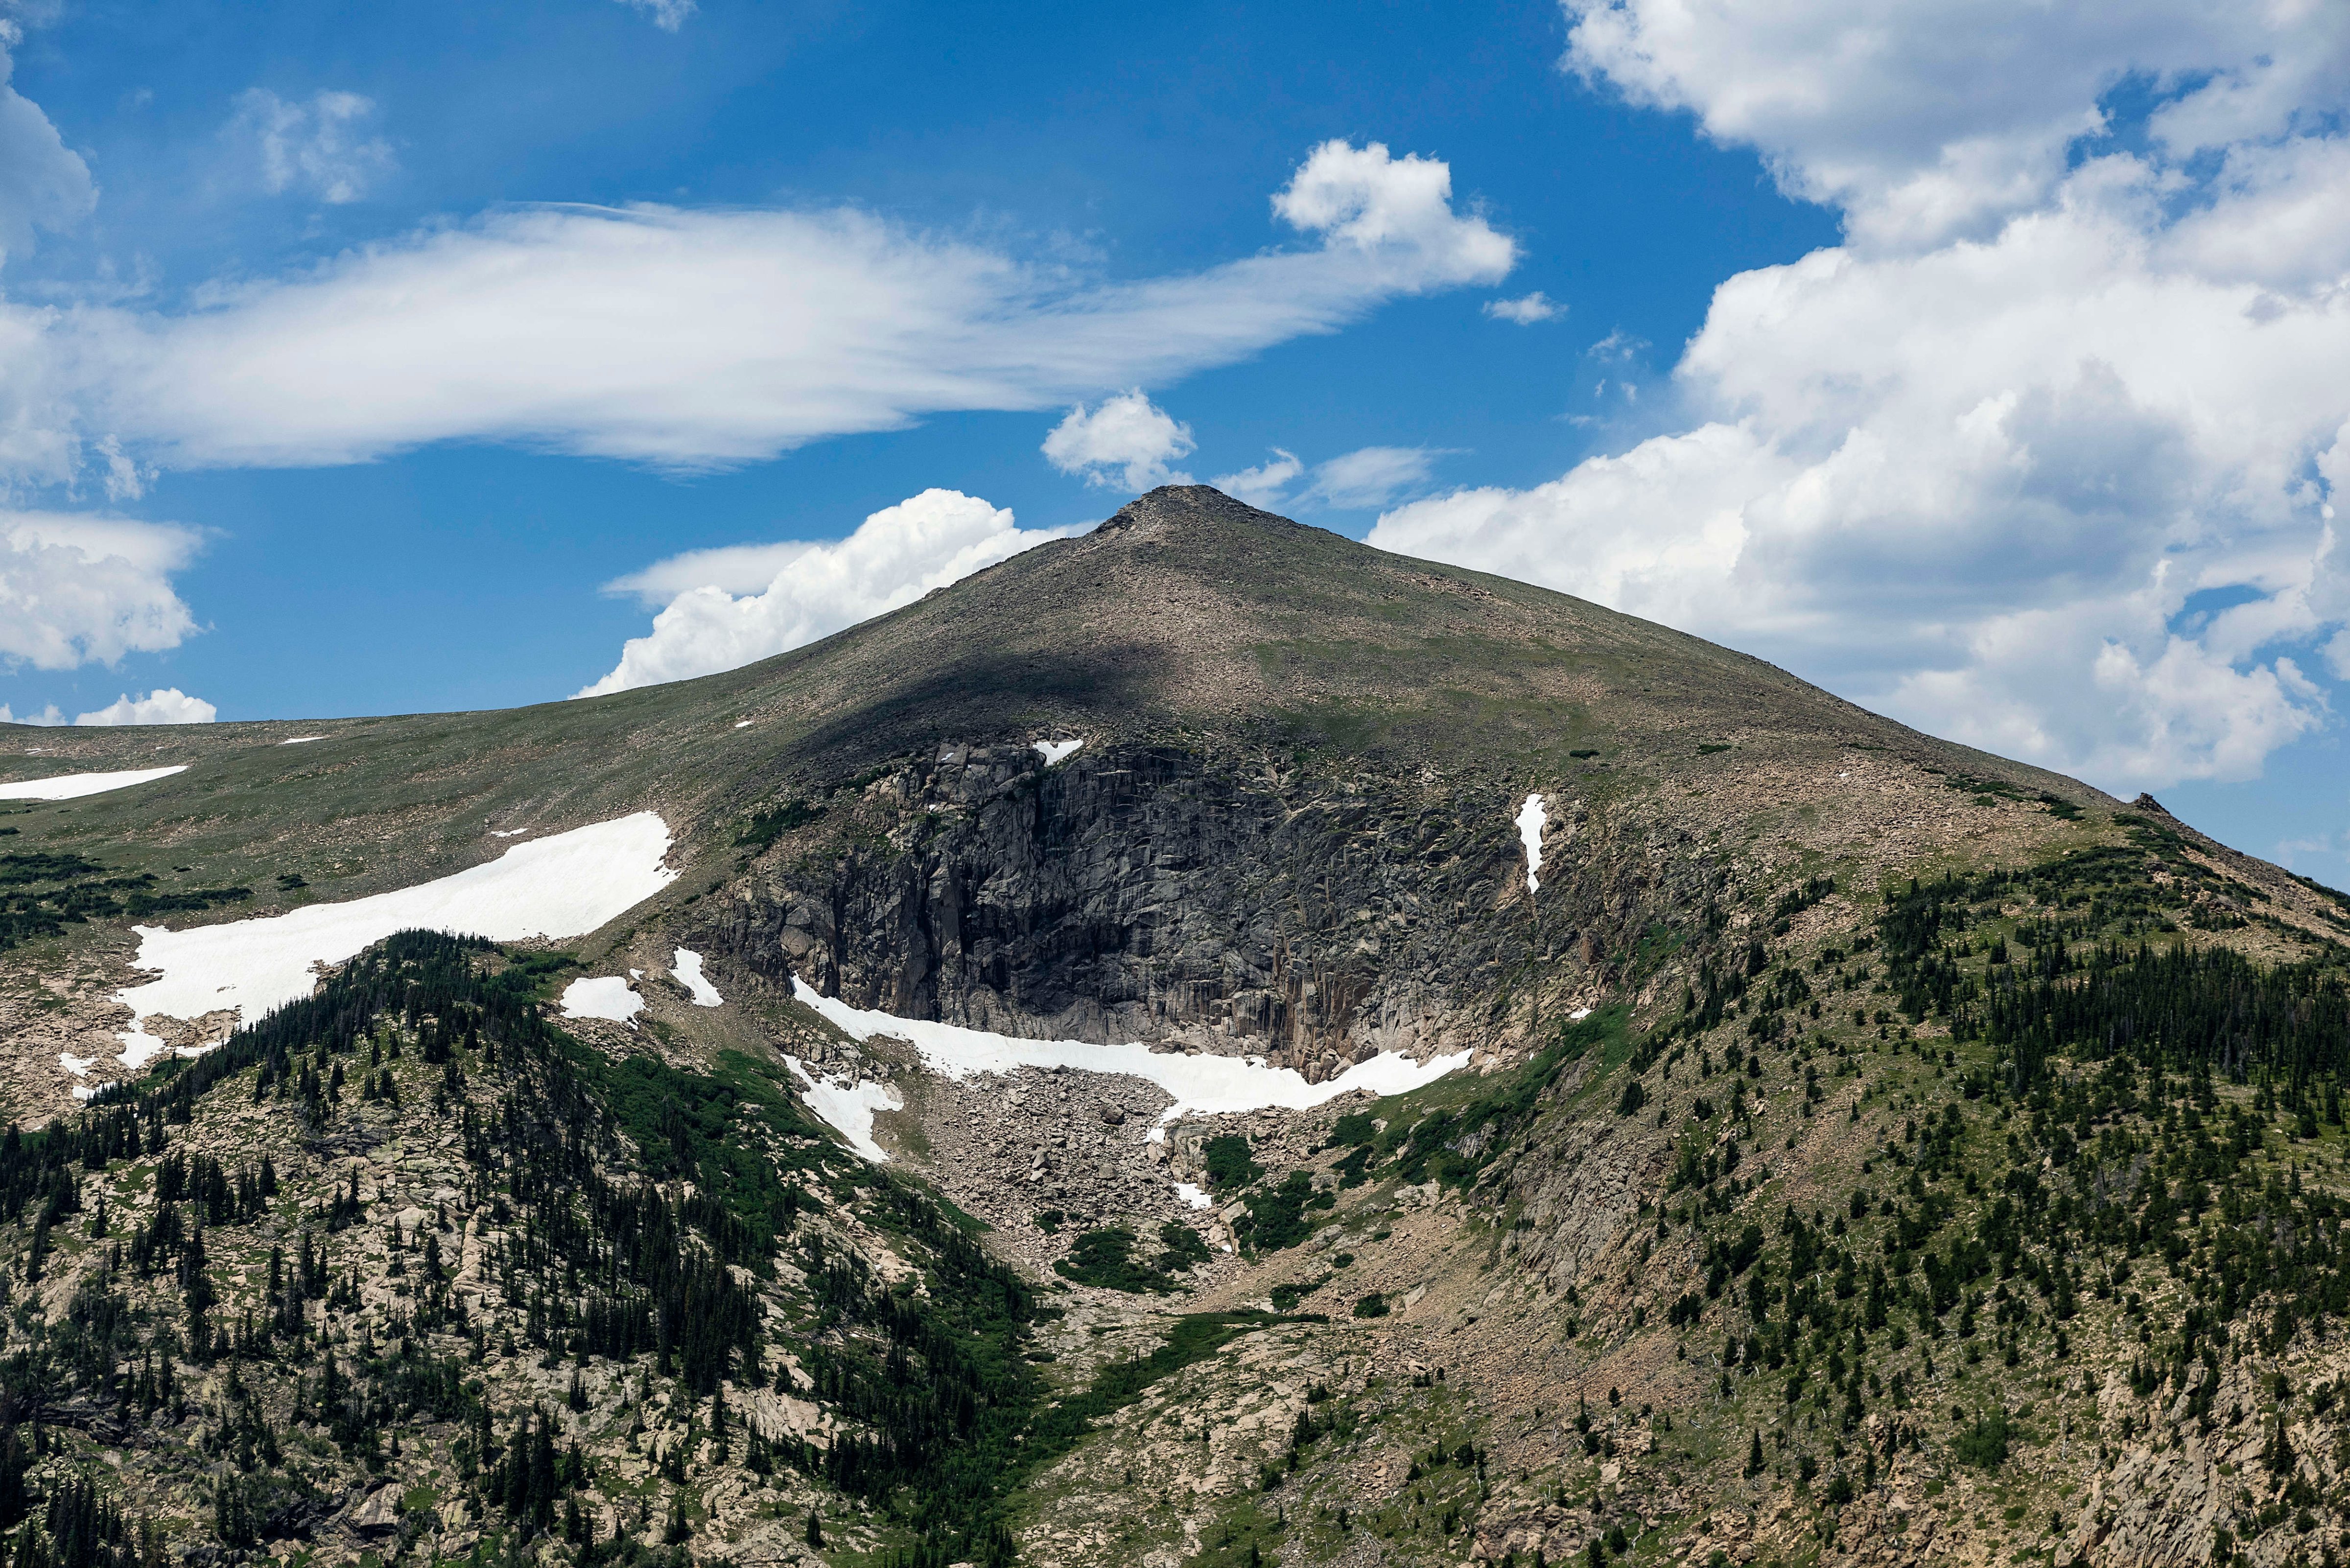 ESTES PARK, COLORADO, UNITED STATES - 2016/07/17: Mountain peak in Rocky Mountain National Park. (Photo by John Greim/LightRocket via Getty Images) (John Greim—LightRocket via Getty Images)